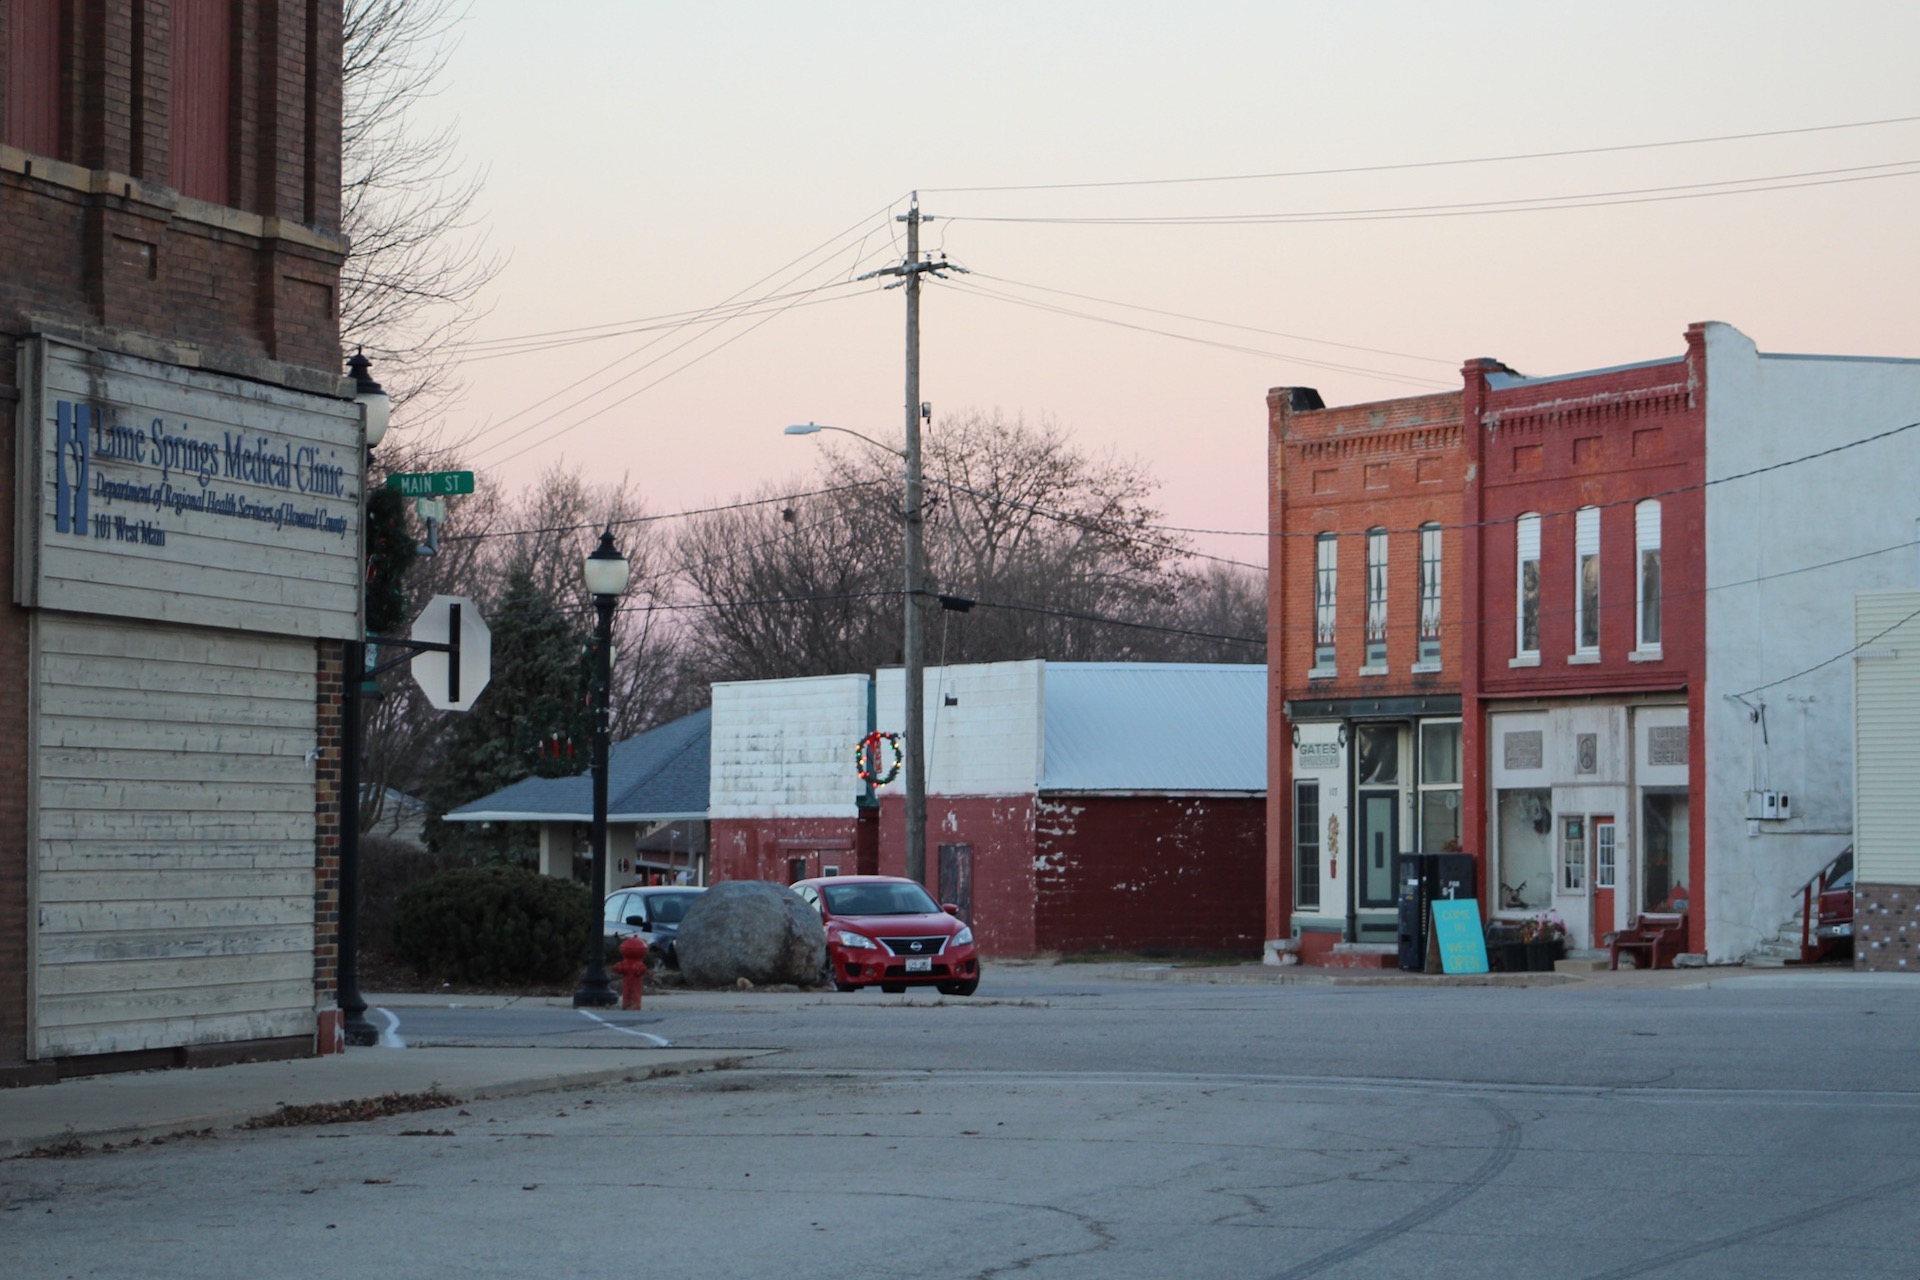 A street scene in Lime Springs, Iowa. Photo by Sabrina Johnkins.